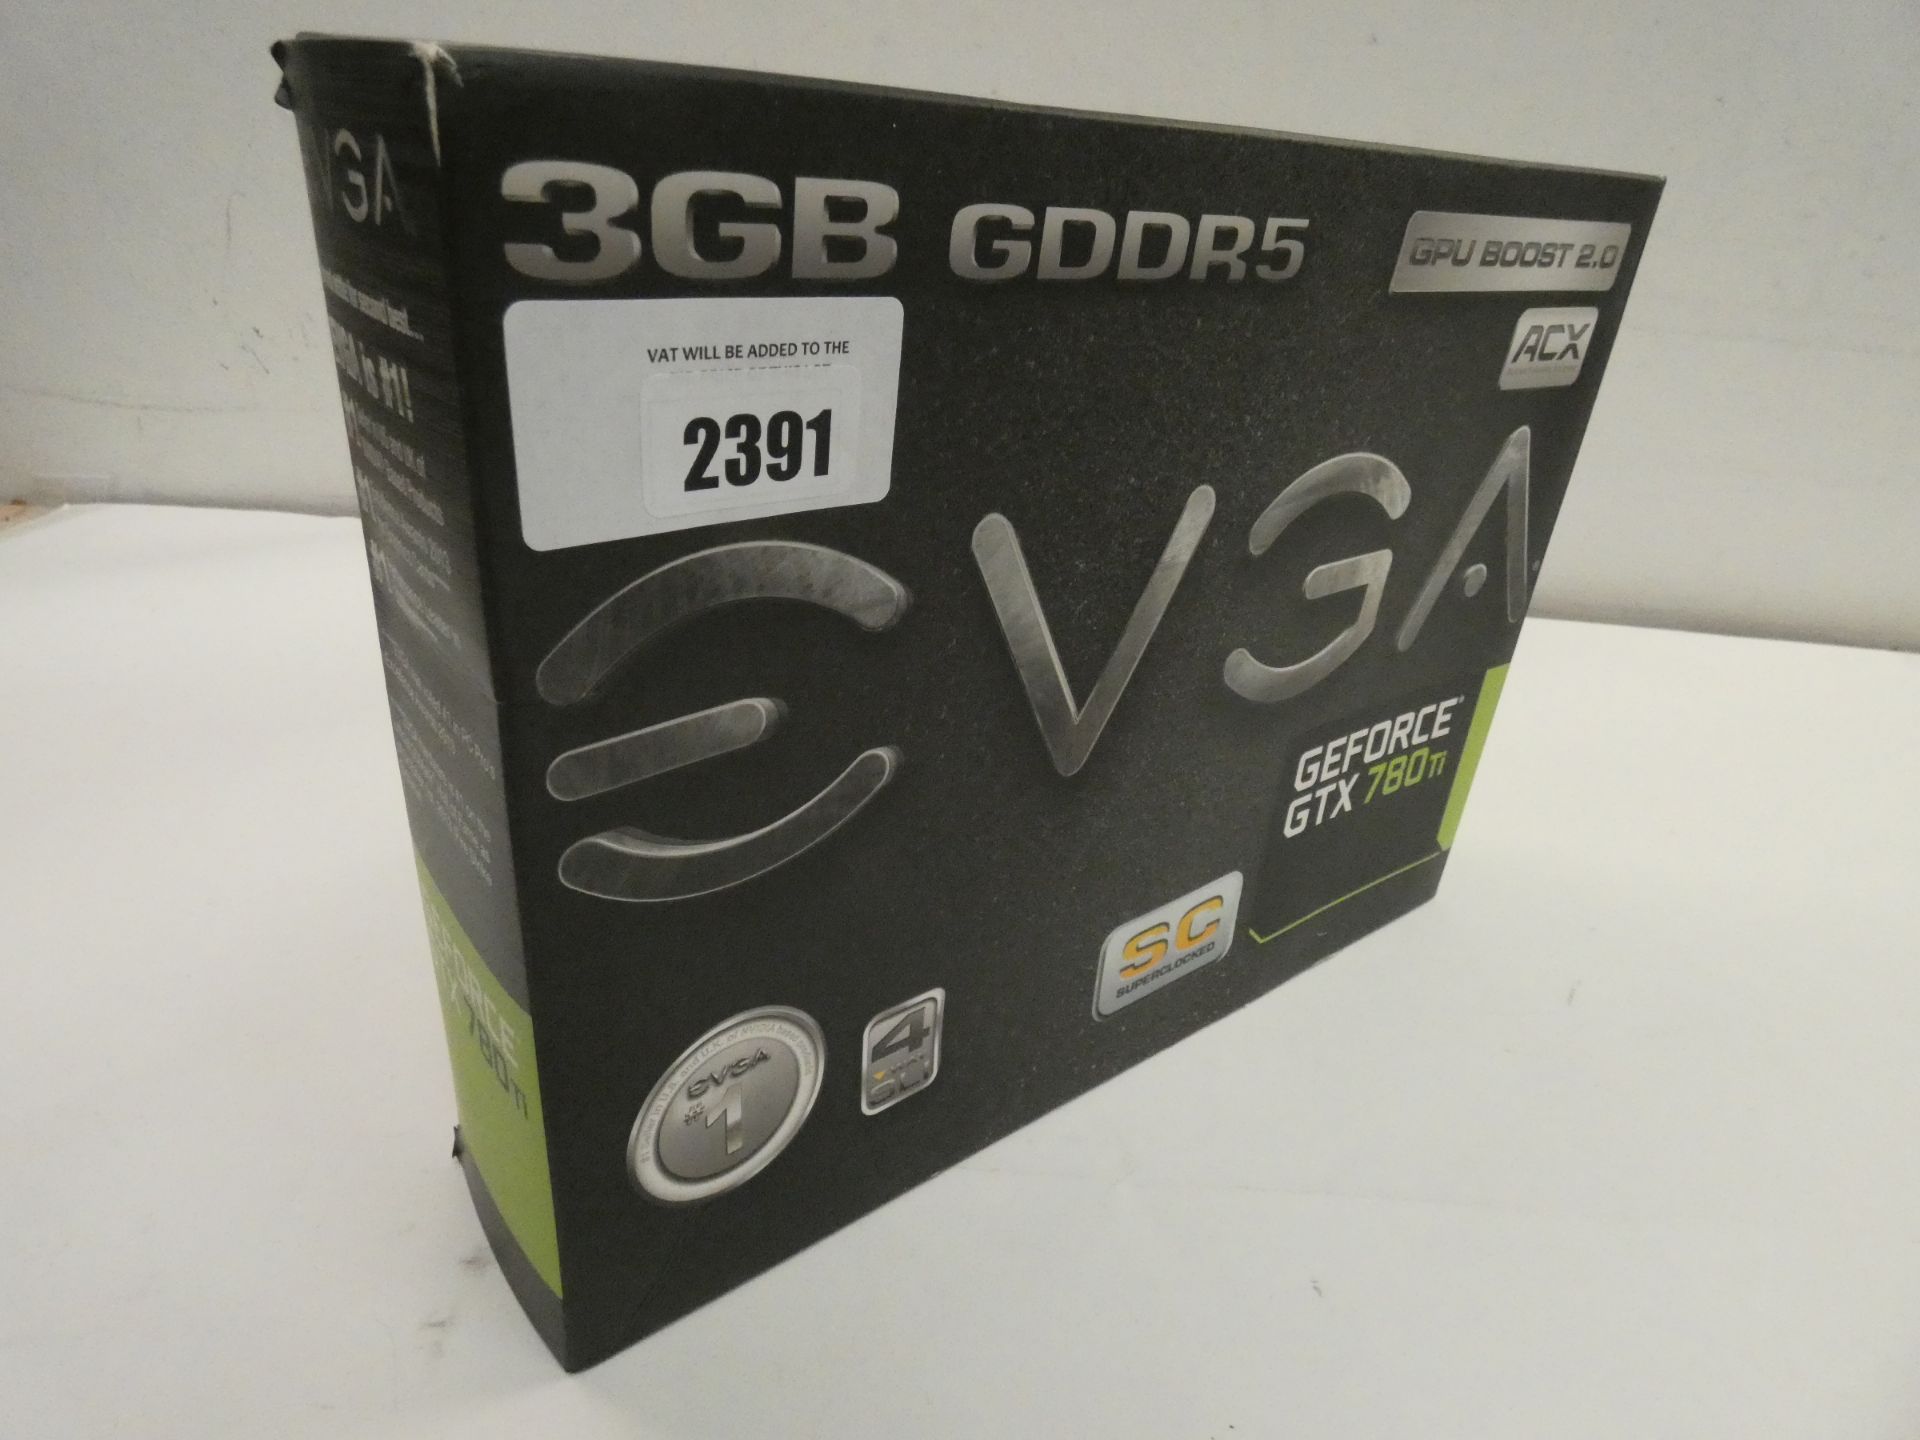 GeForce GTX 780i graphics card